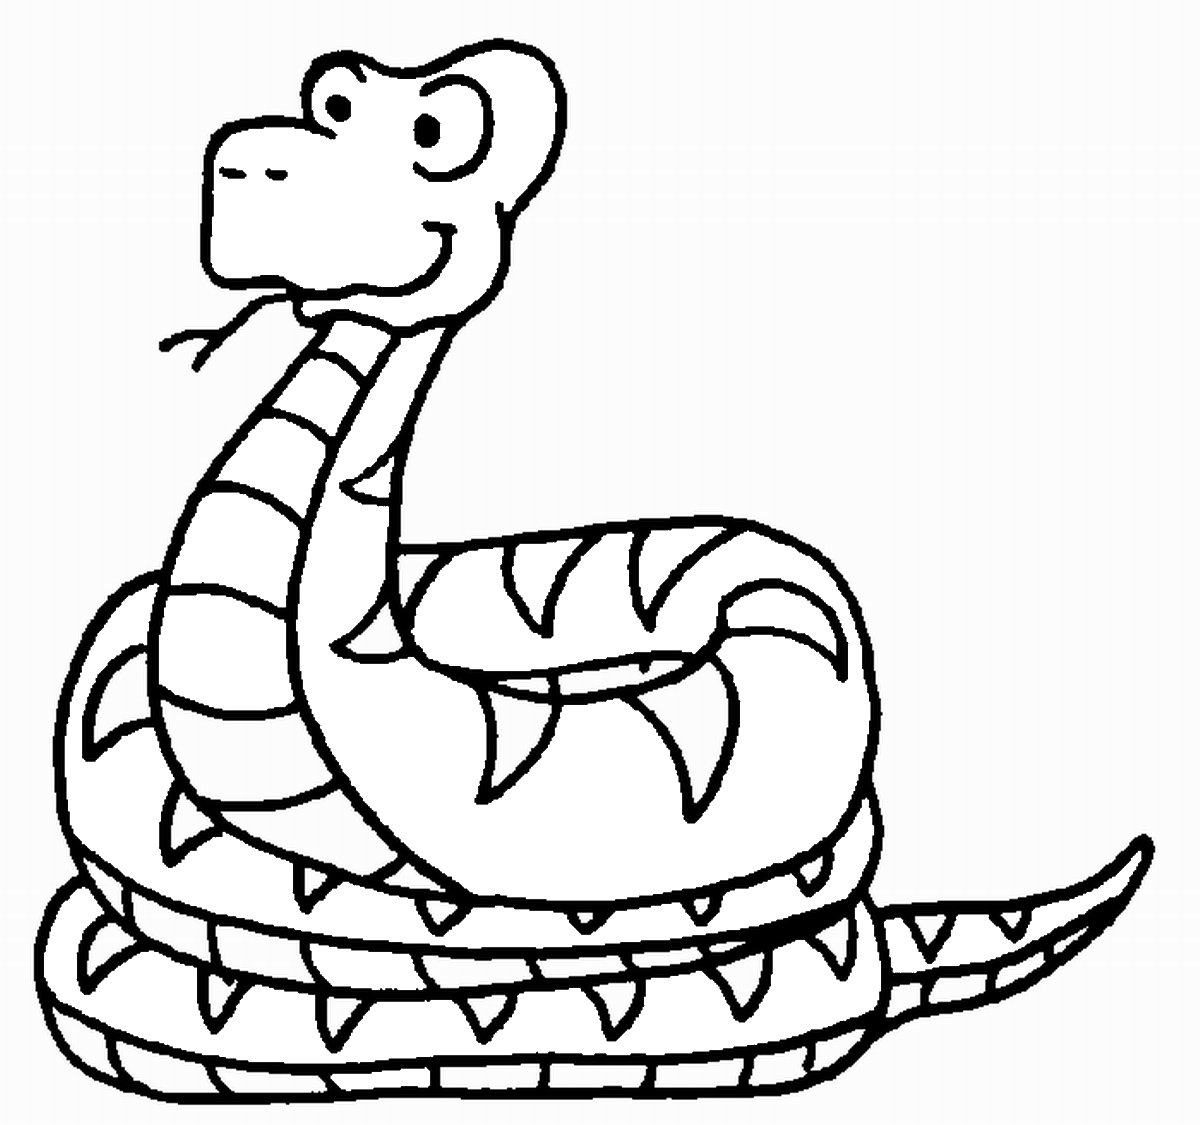 Змея раскраска. Змея раскраска для детей. Раскраска змеи для детей. Змея картинка раскраска. Раскраска змей для детей